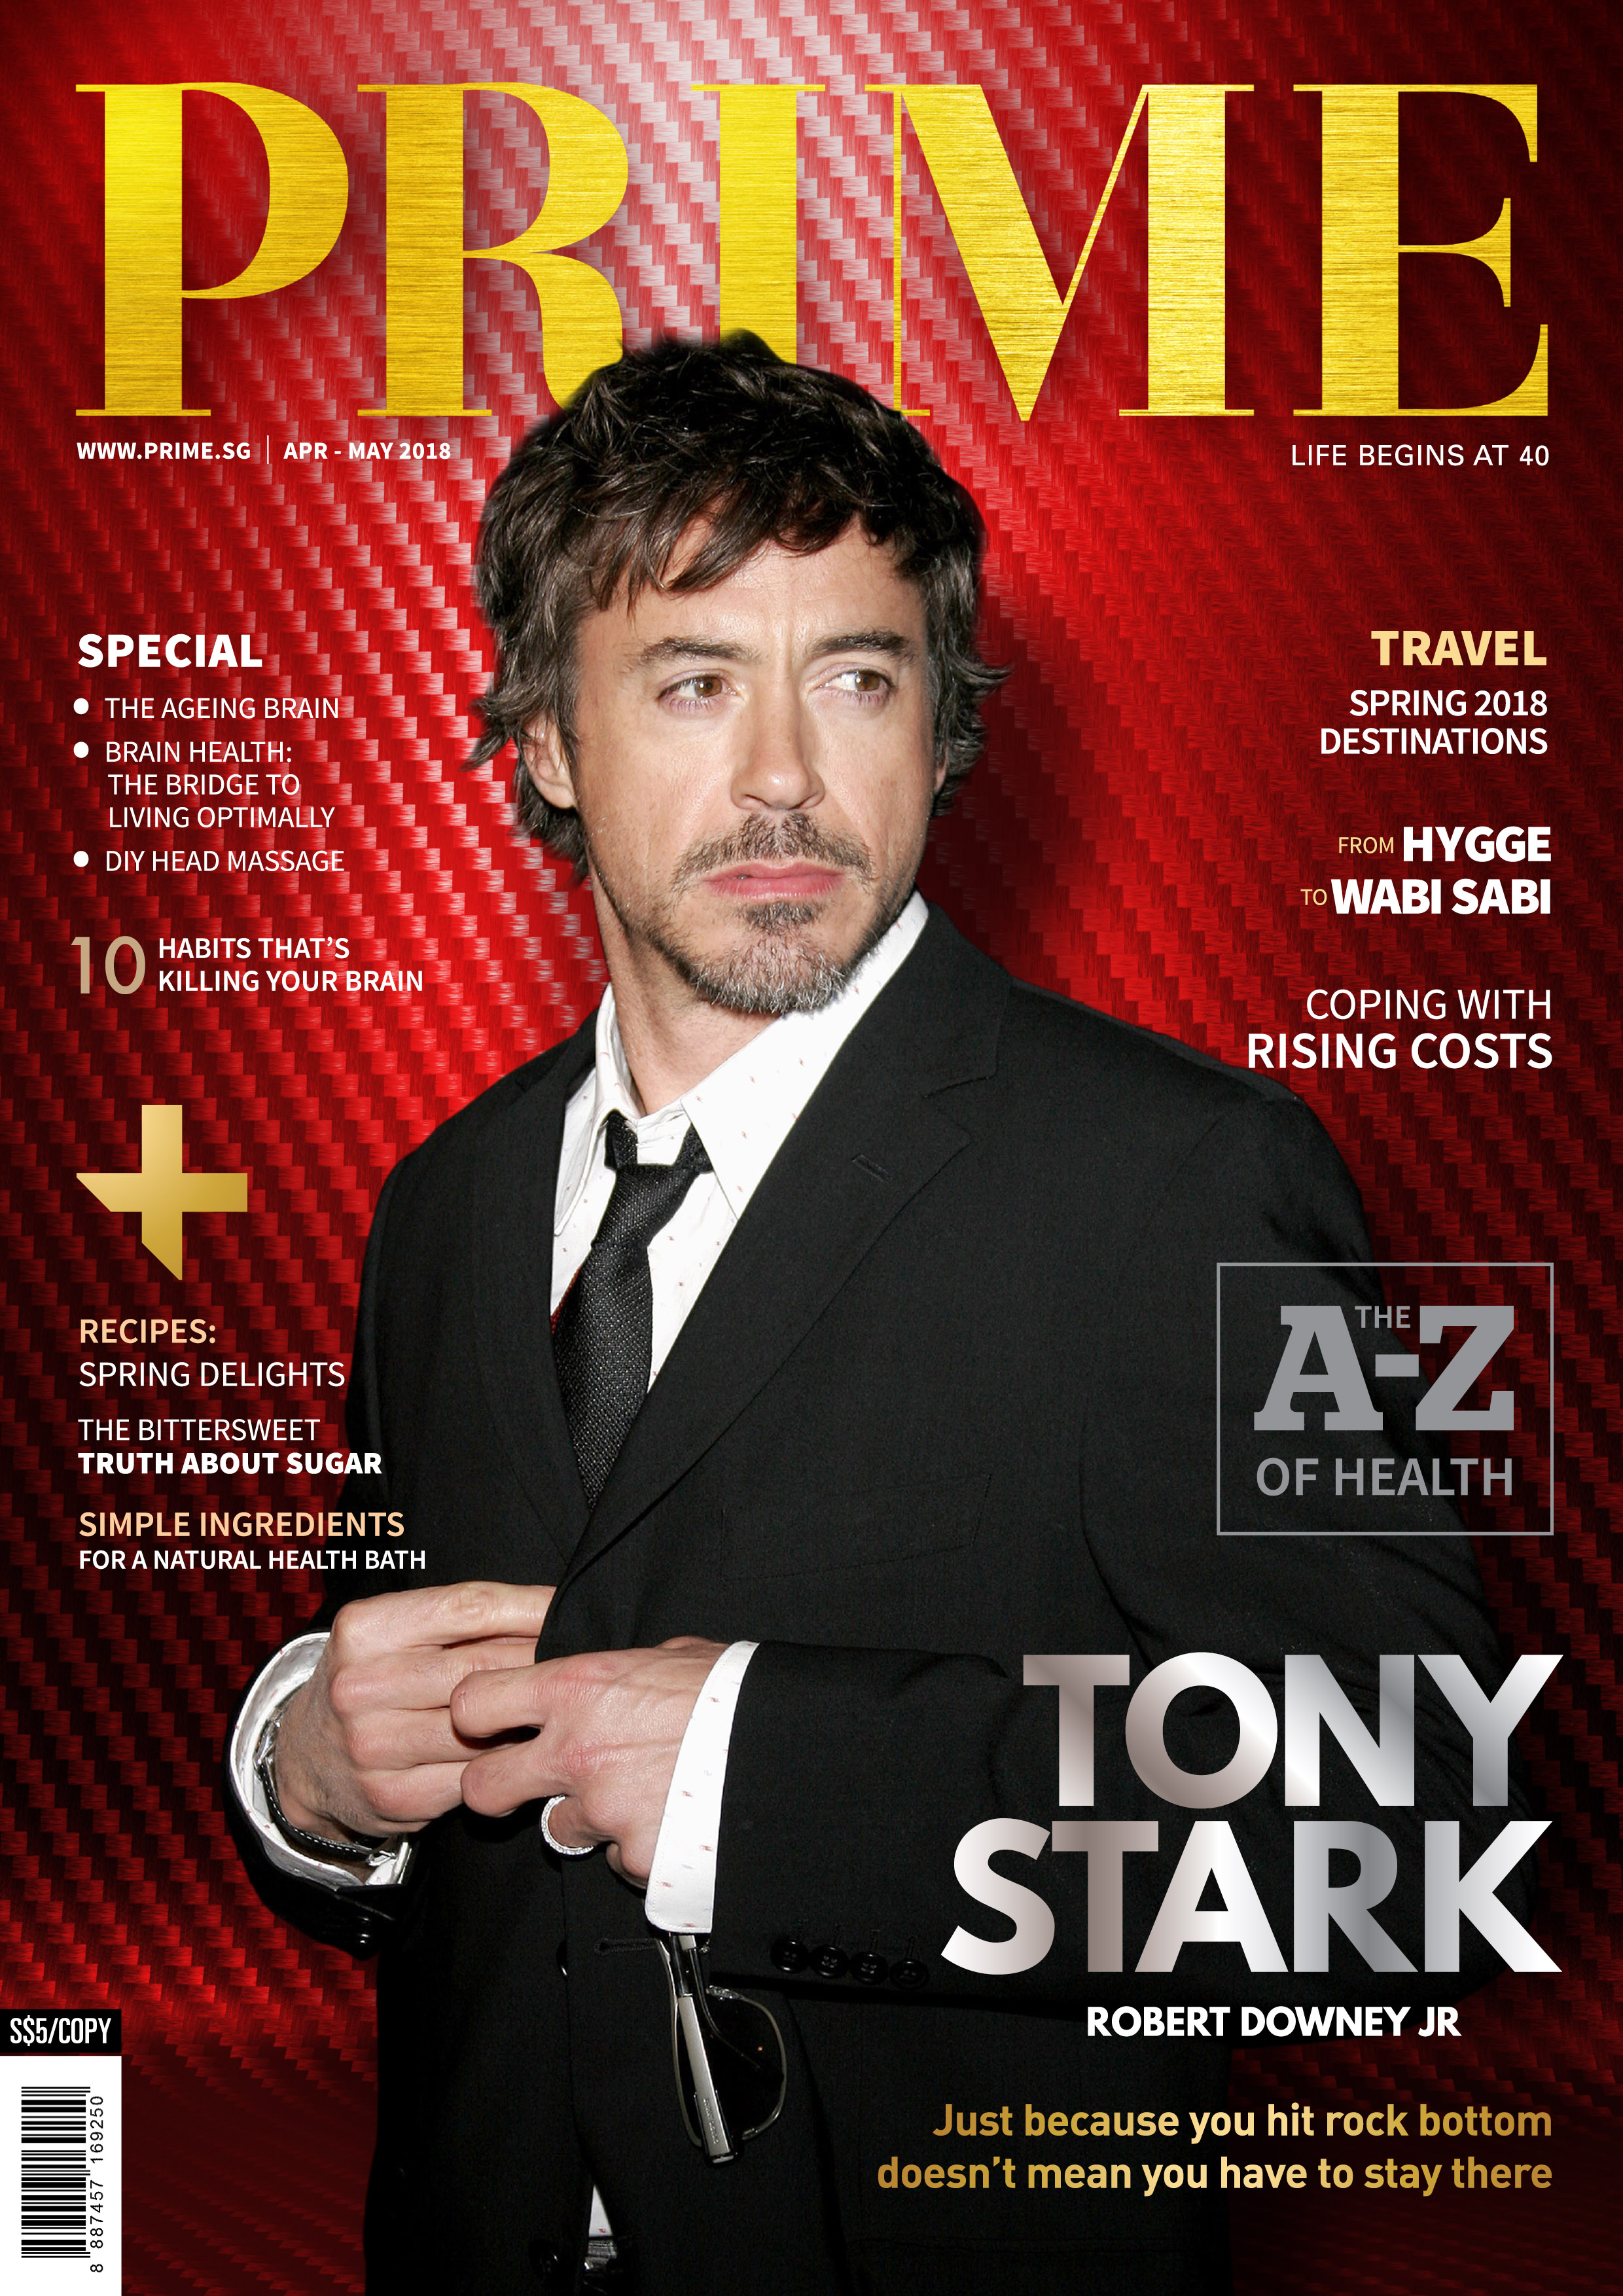 First magazine. Prime журнал. Prime one Magazine журнал. Соловьев на обложке журнала. Time Magazine Robert Downey.